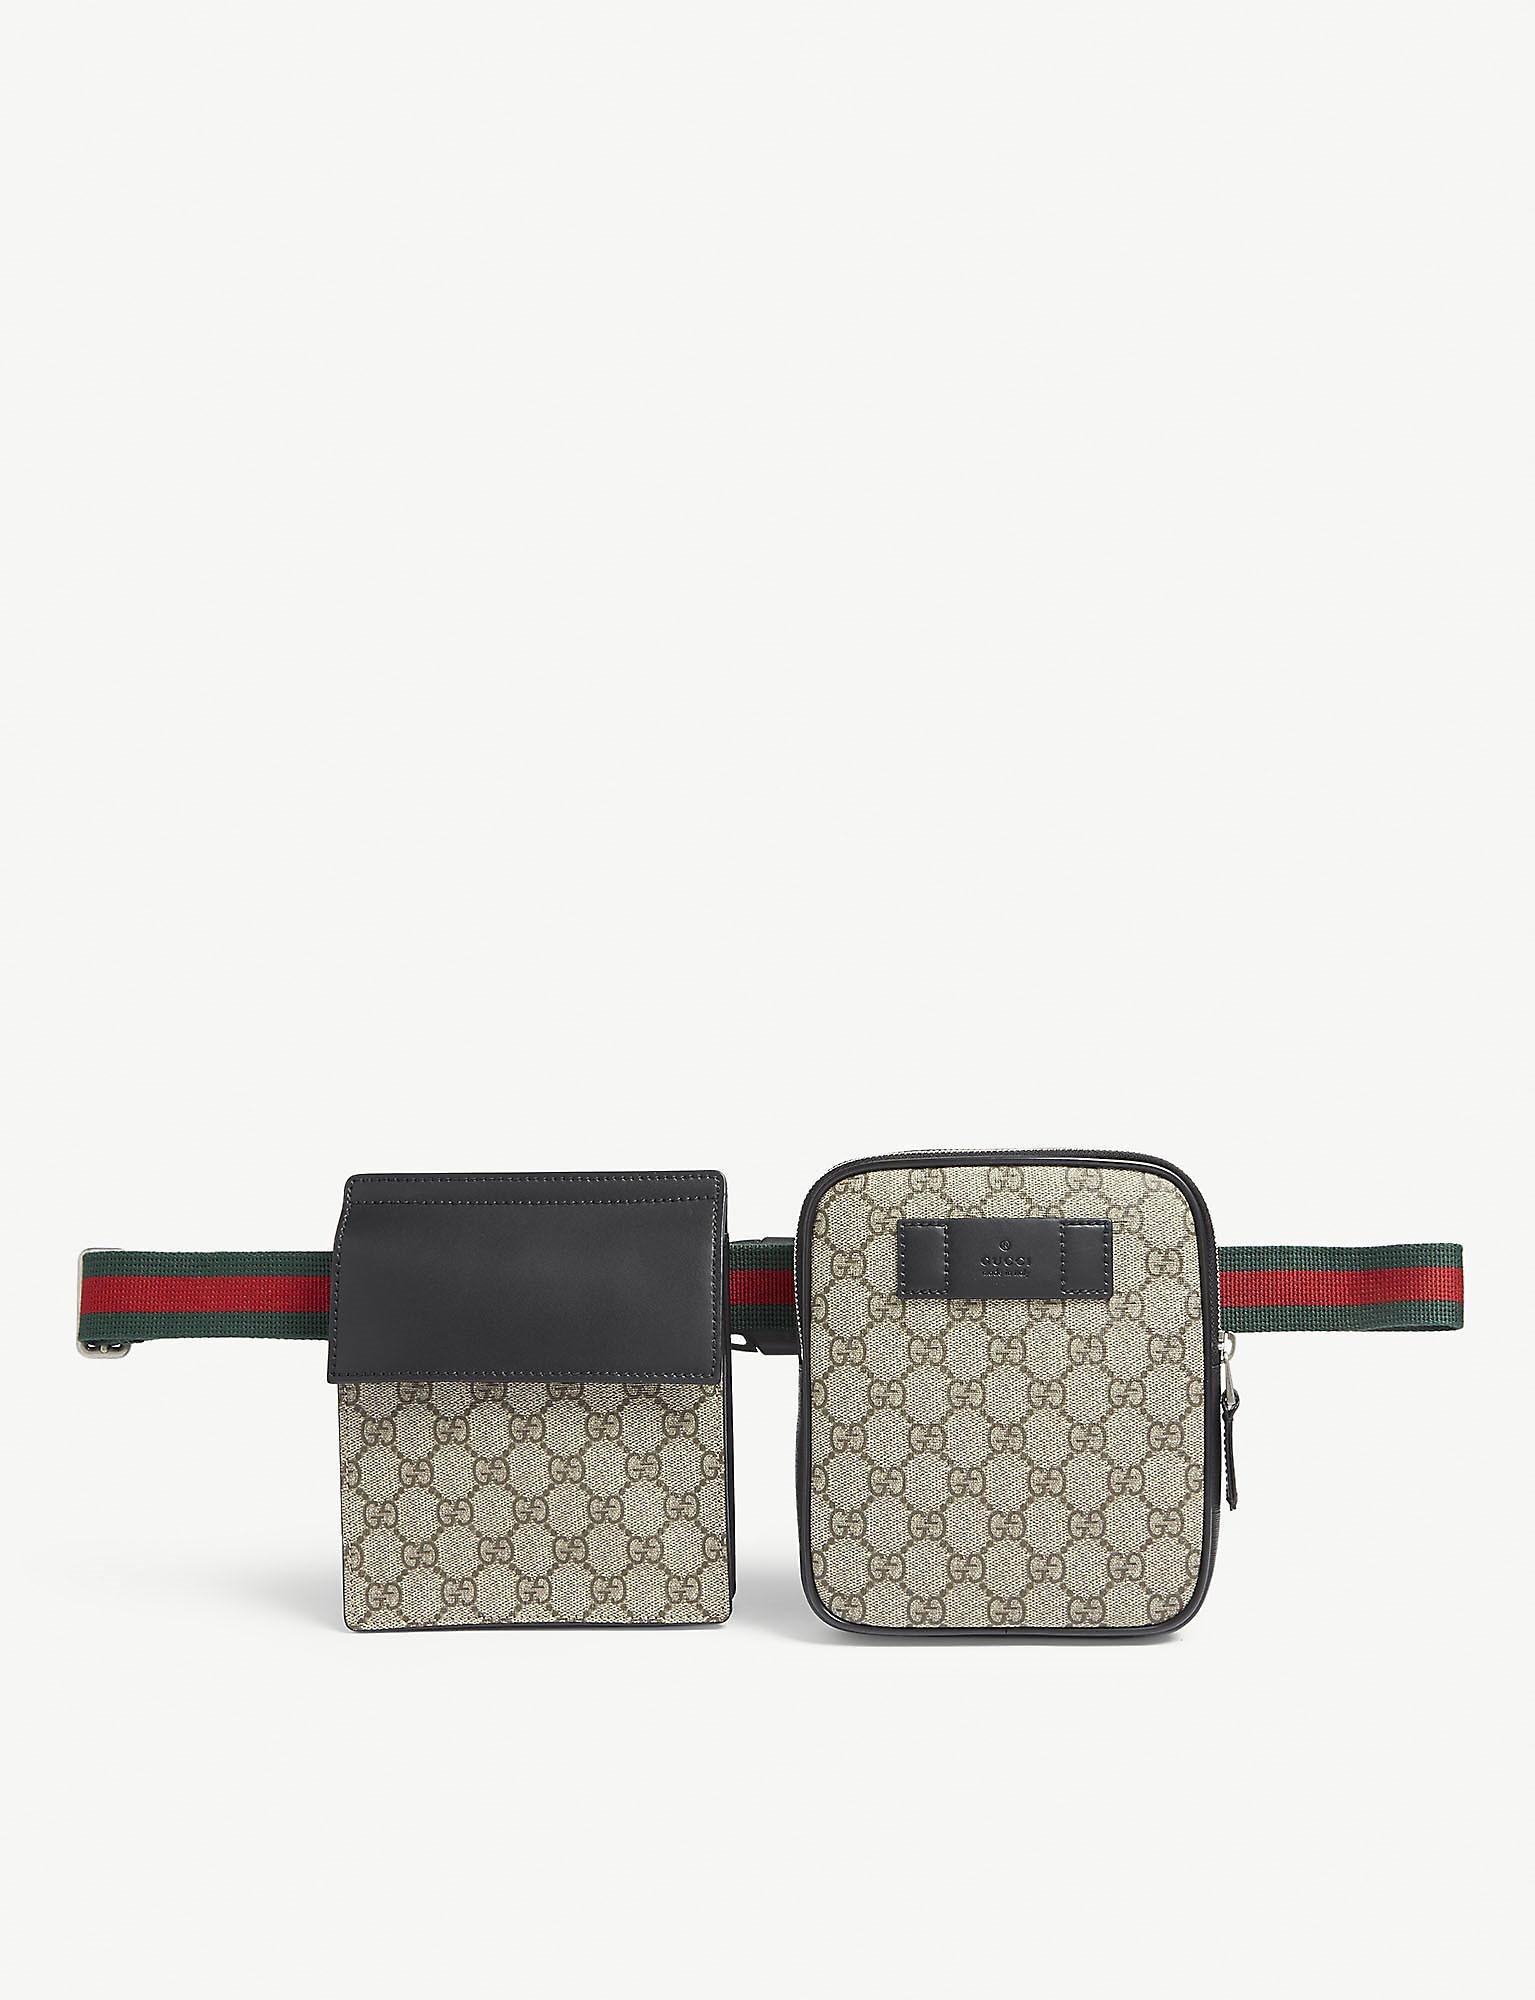 Gucci GG Supreme Canvas Belt Bag in Natural - Lyst